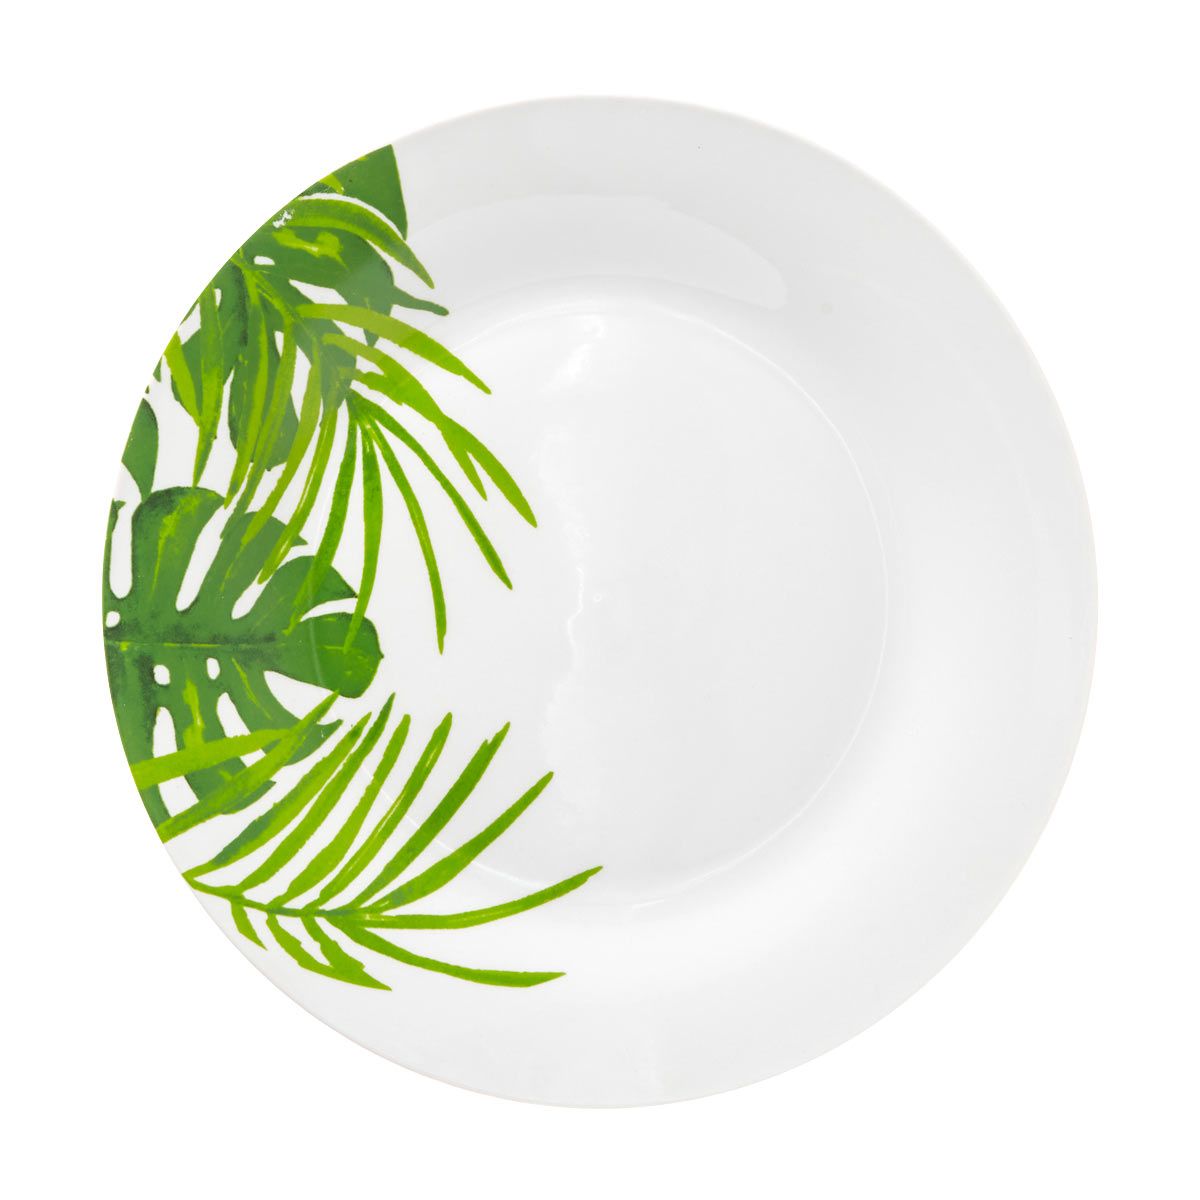 Tropical Leaf Printed Dinner Plate on Sale At Dollar General